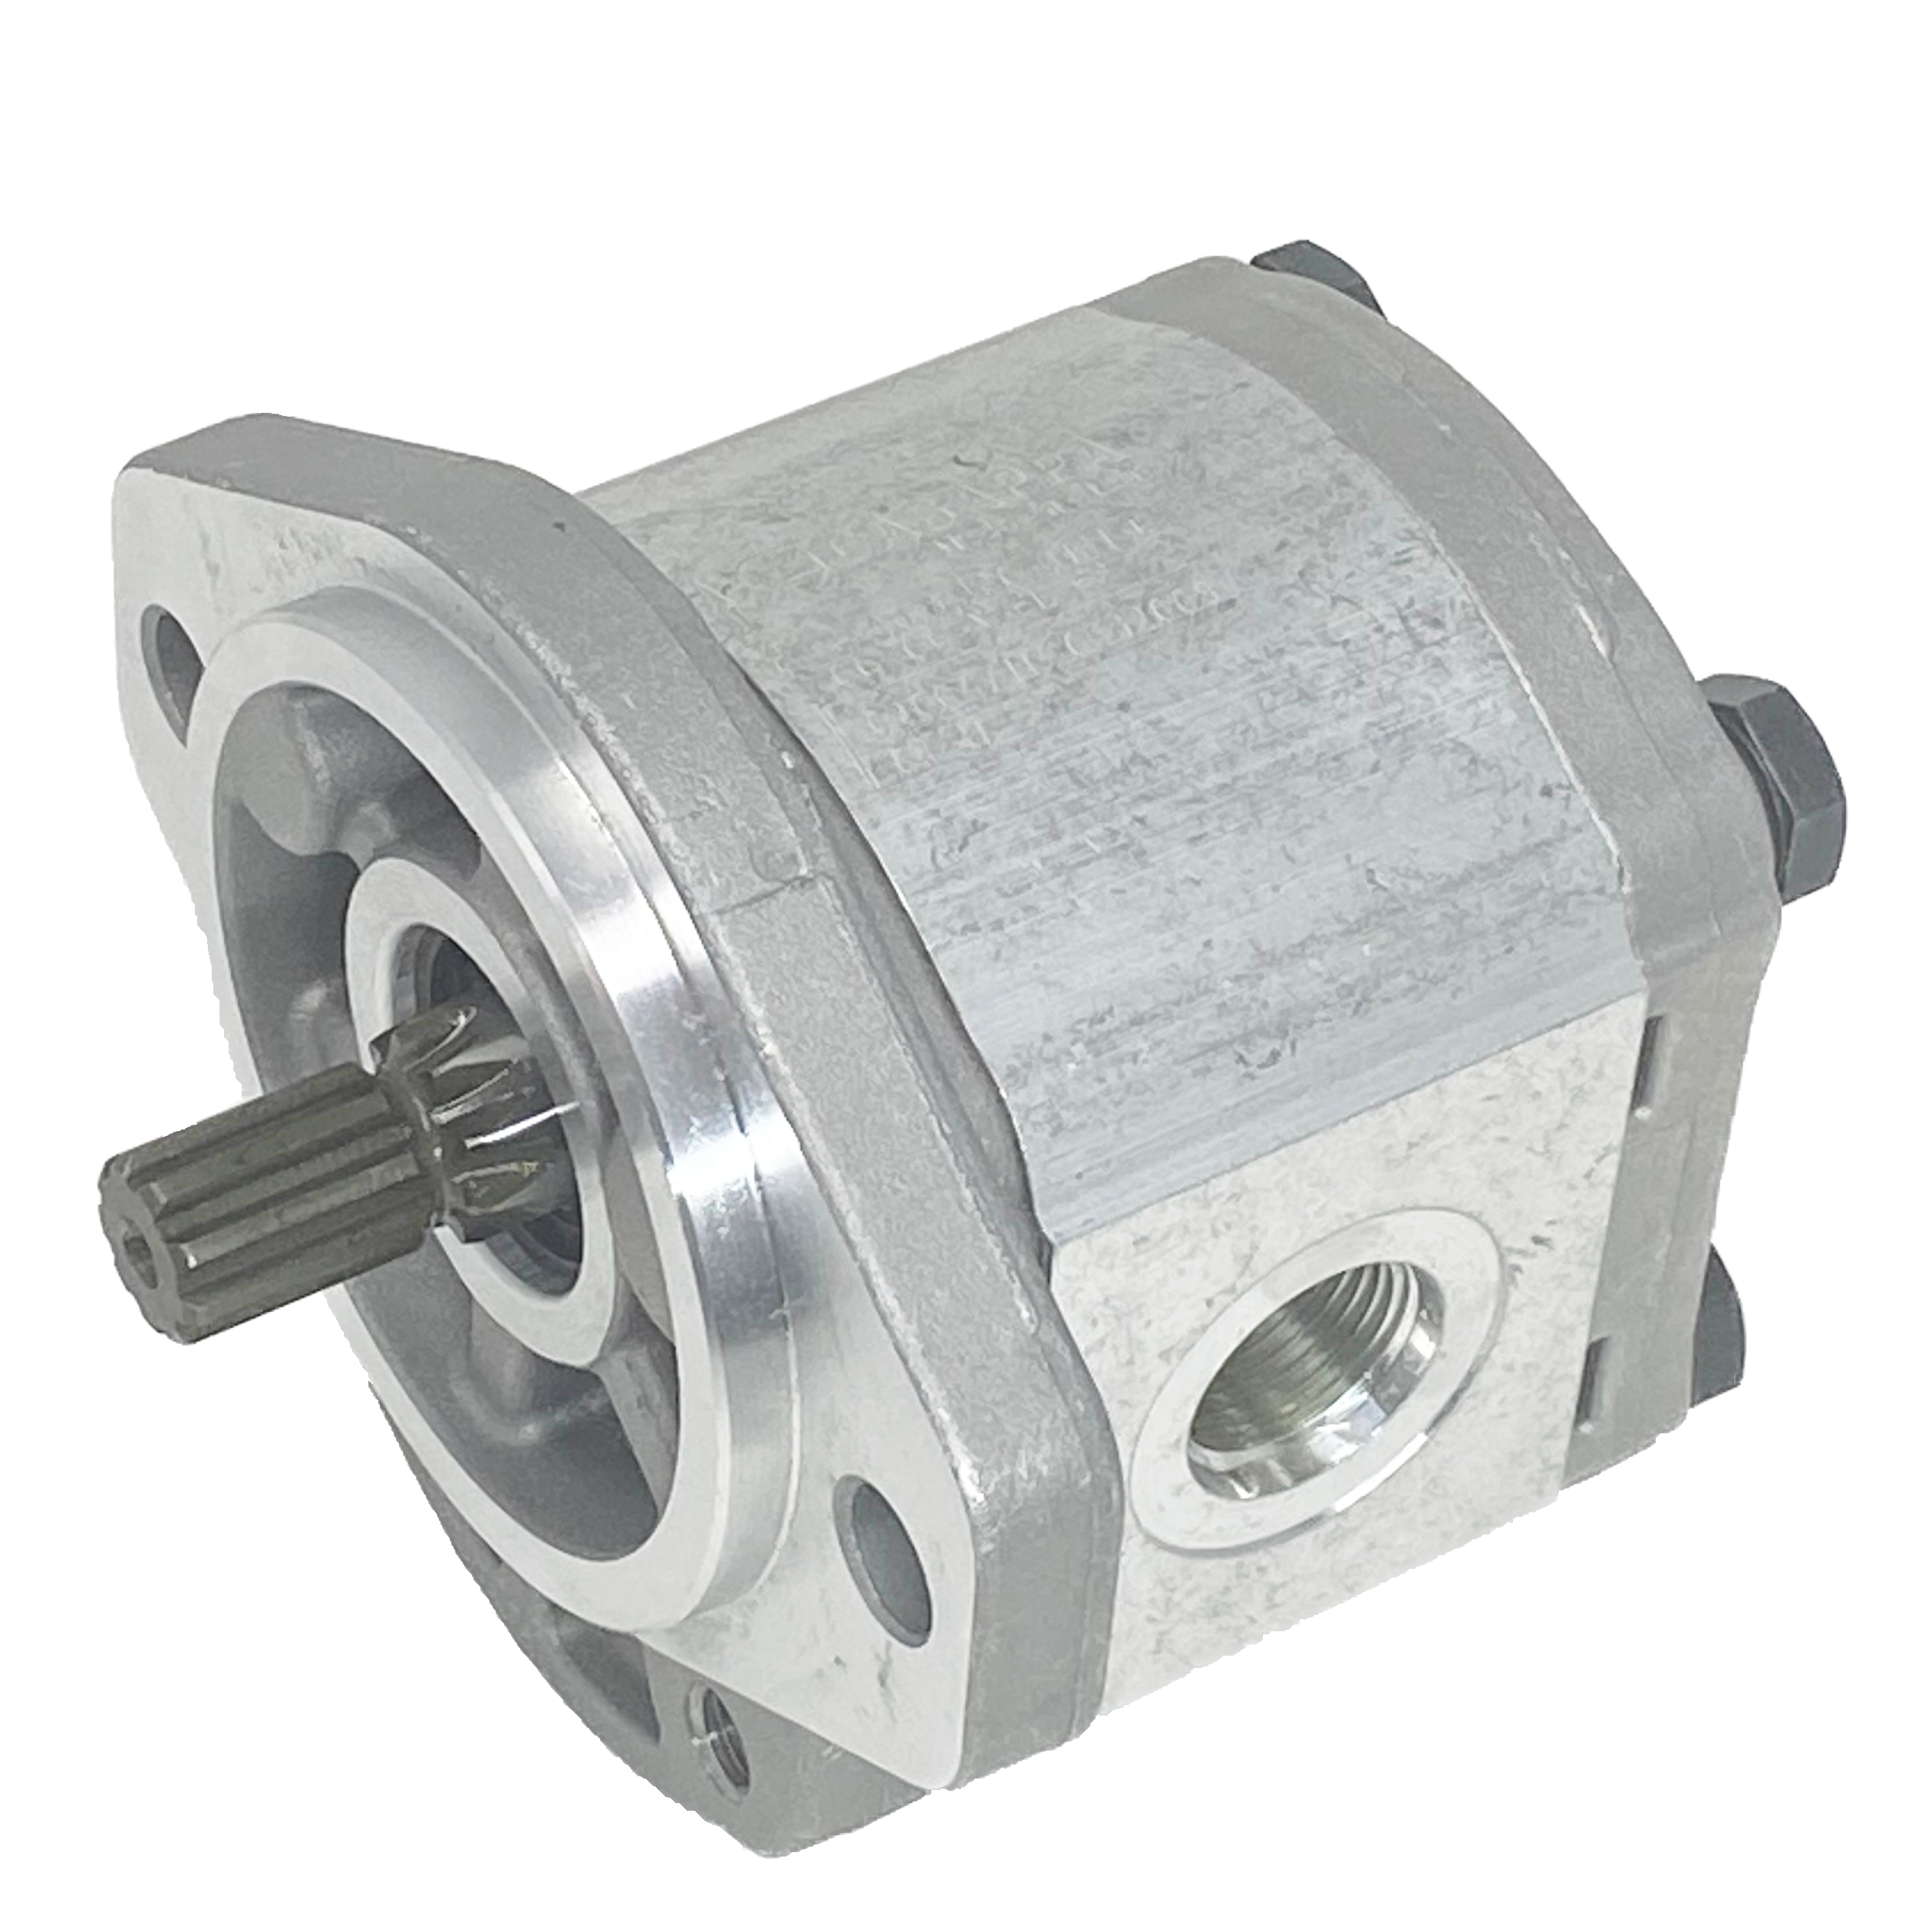 PLM20.9R0-03S1-LOC/OC-N-EL : Casappa Polaris Gear Motor, 9.17cc, 3625psi Rated, 3500RPM, Reversible Rear External Drain, 9T 16/32dp Shaft, SAE A 2-Bolt Flange, 0.625 (5/8") #10 SAE Inlet, 0.625 (5/8") #10 SAE Outlet, Aluminum Body & Flange